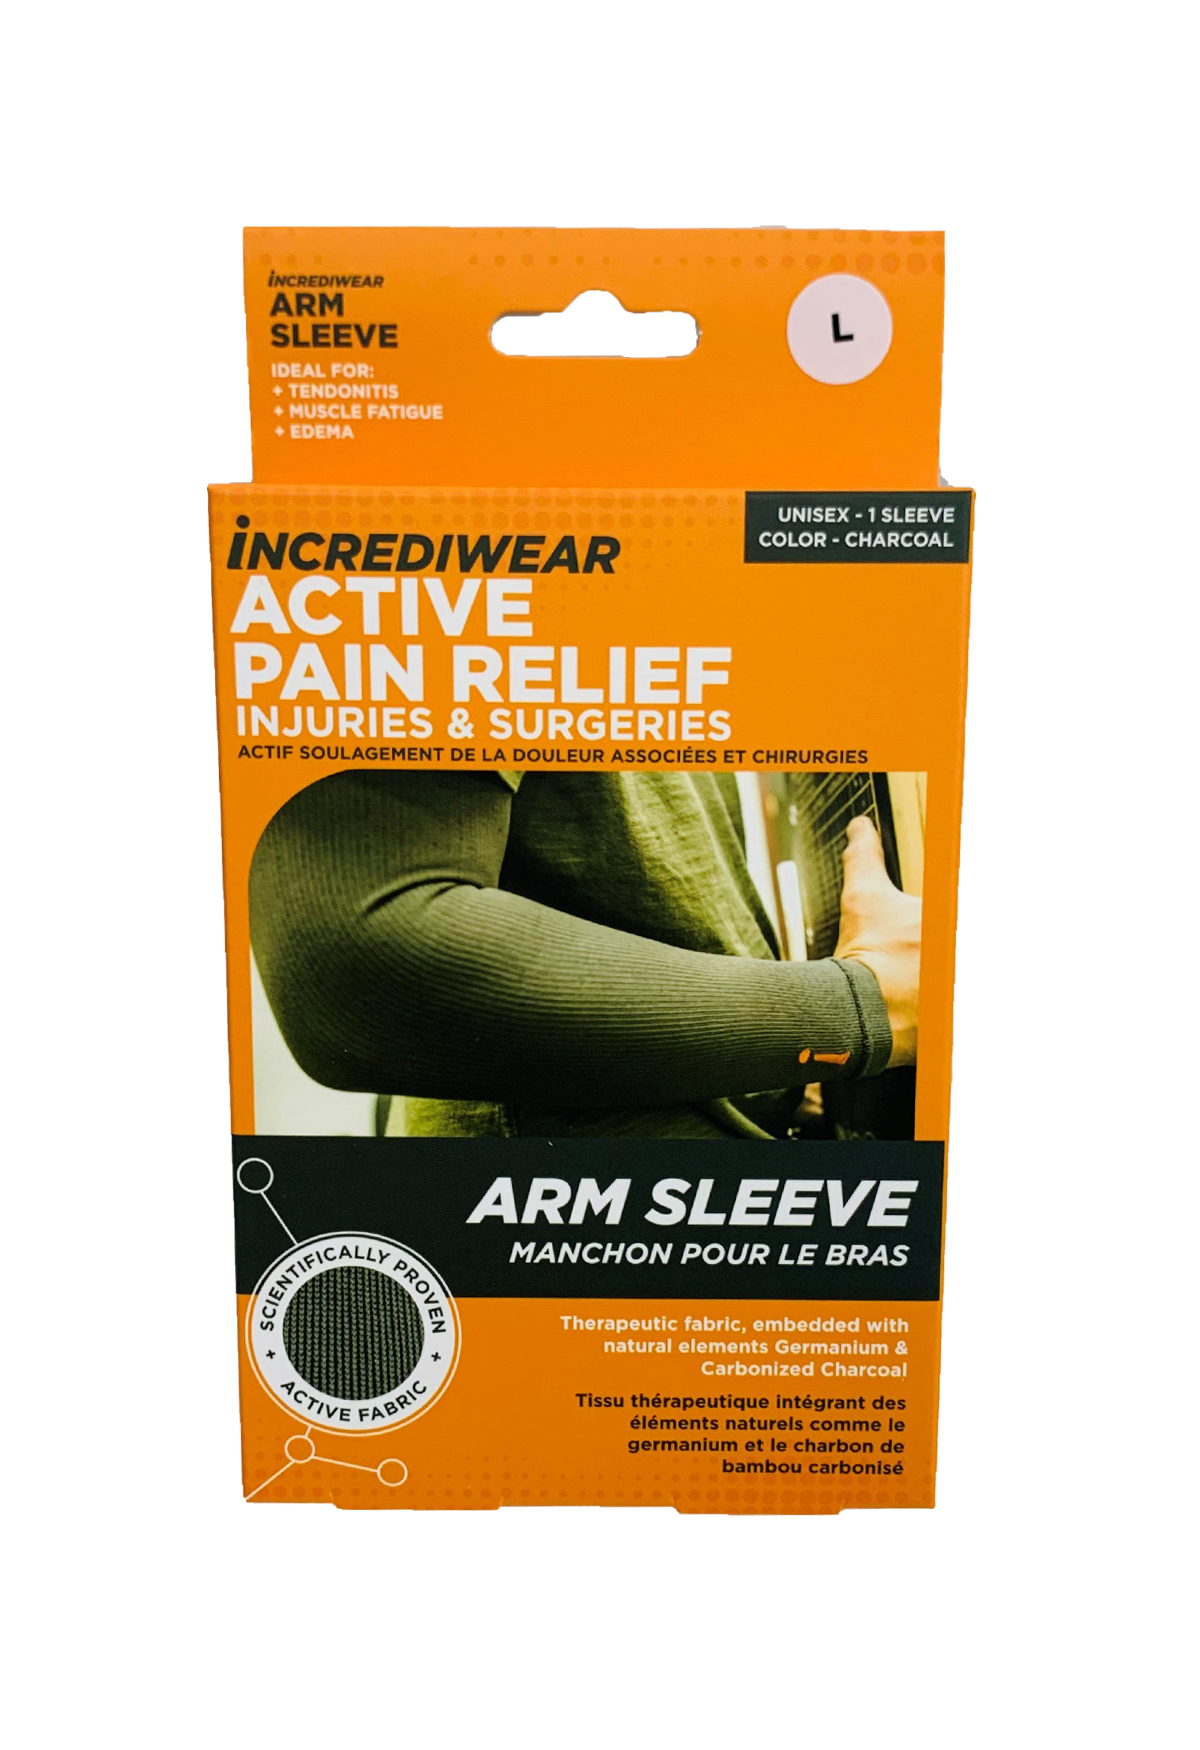 Incrediwear Shin and Elbow reduces elbow & shin splint pain